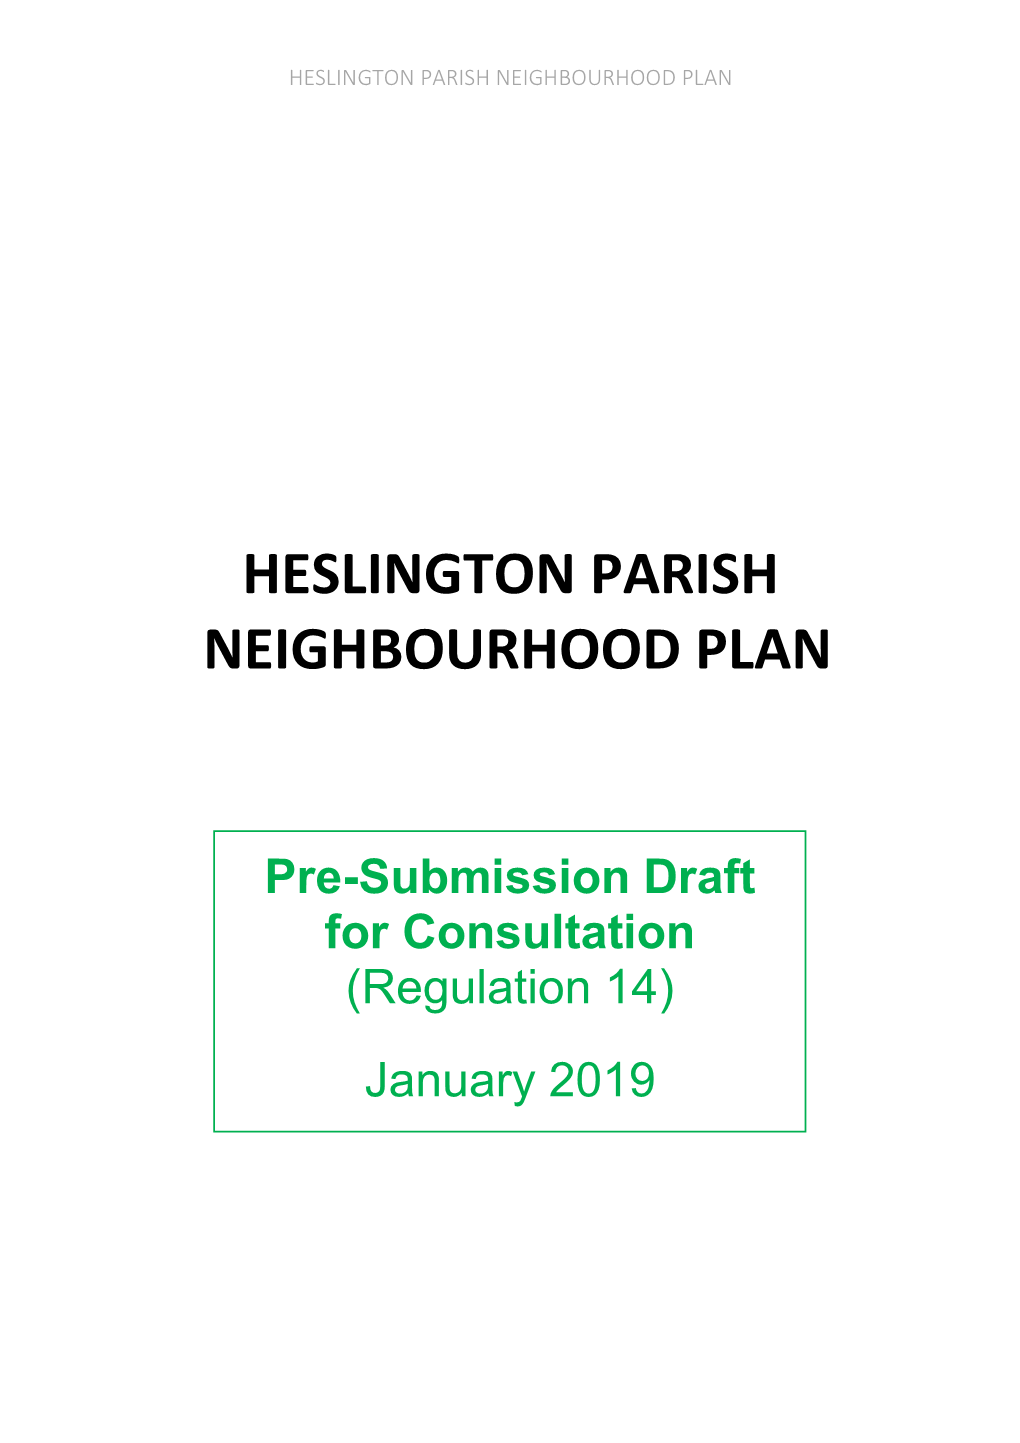 Heslington Parish Neighbourhood Plan